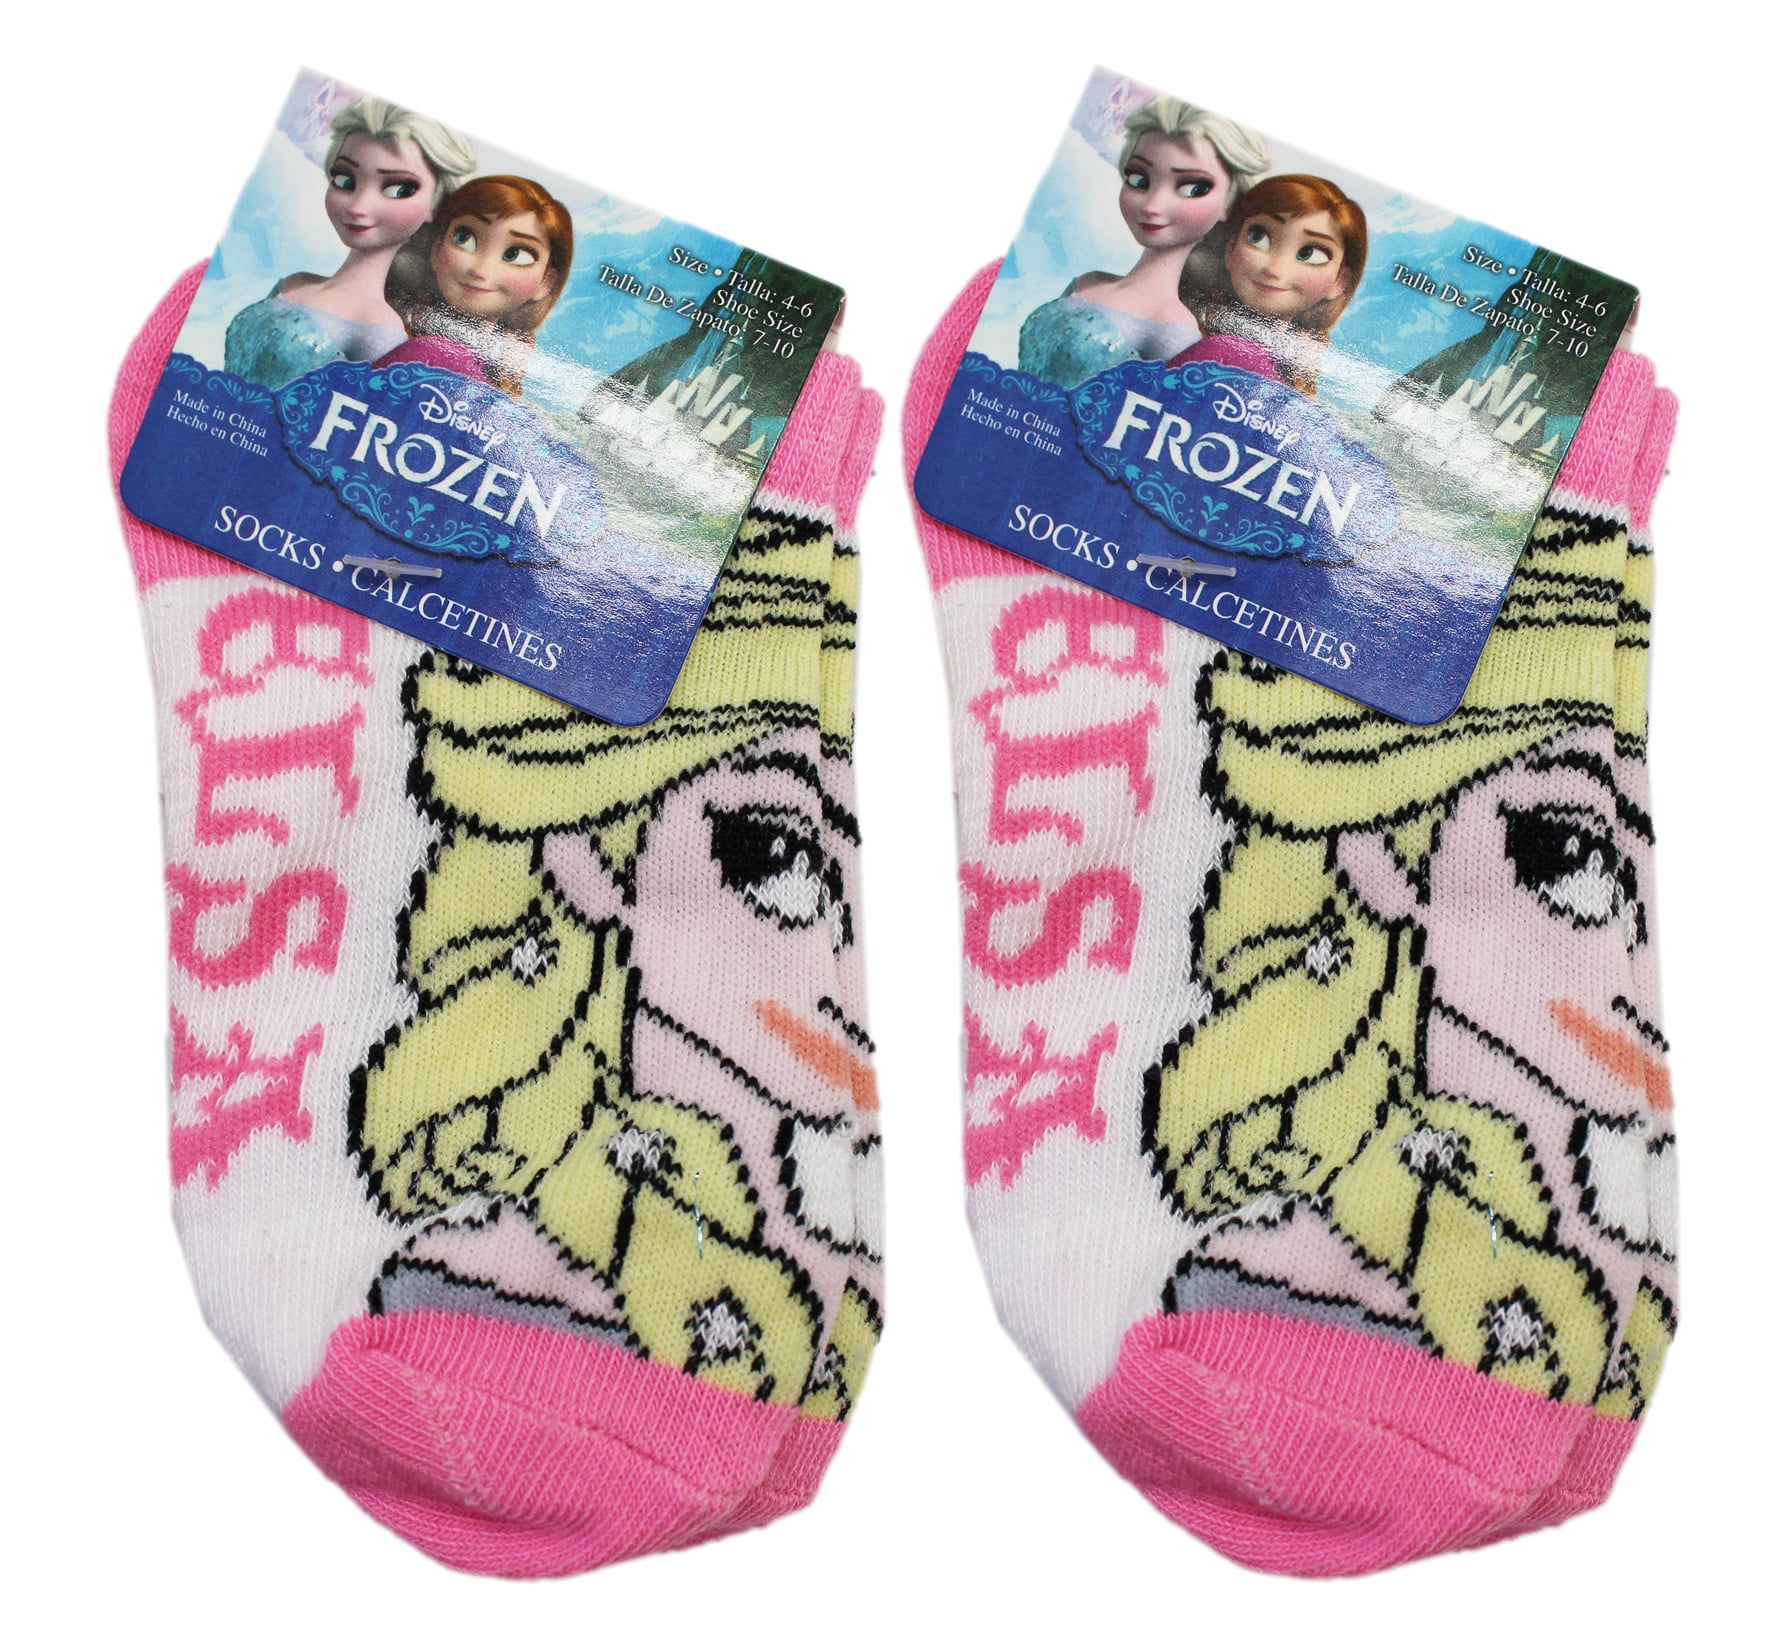 Frozen Socks 4 Pair Pack Disney Frozen 2 Princess Socks Girls’ Sock Size 6-8 